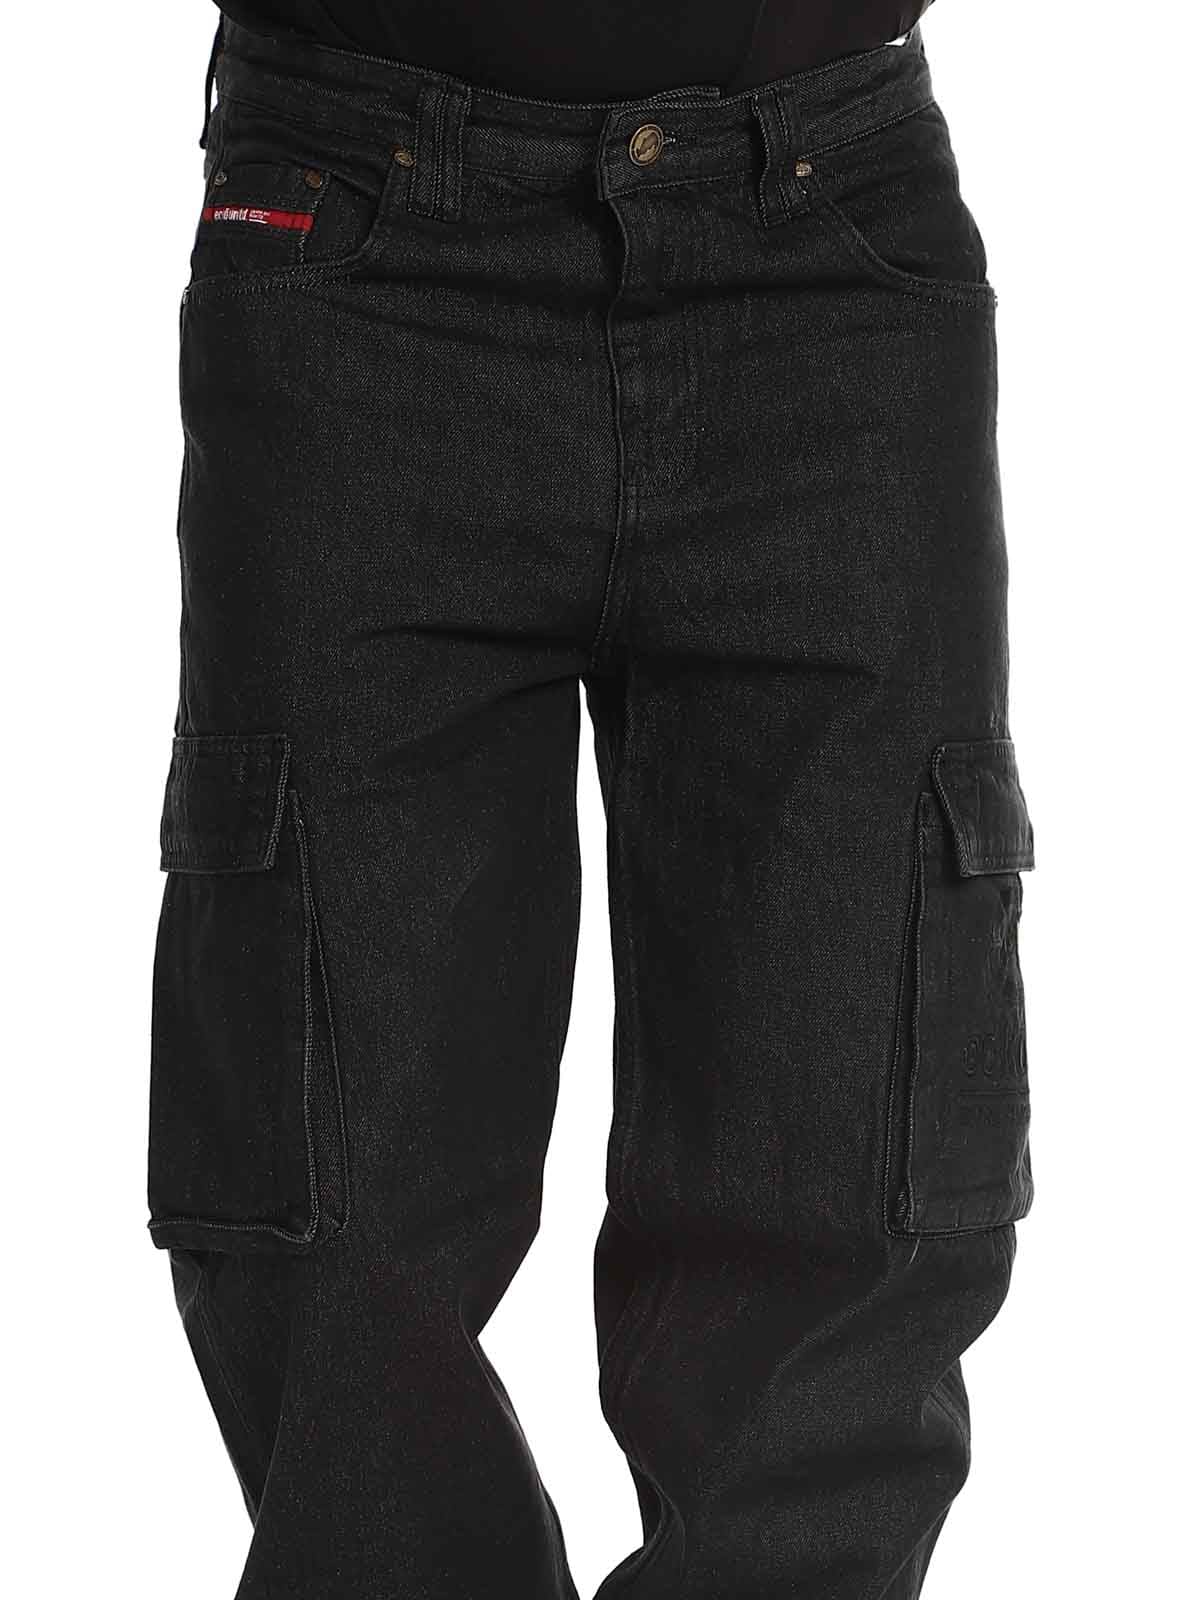 Ecko-unitd-jeans4.jpg